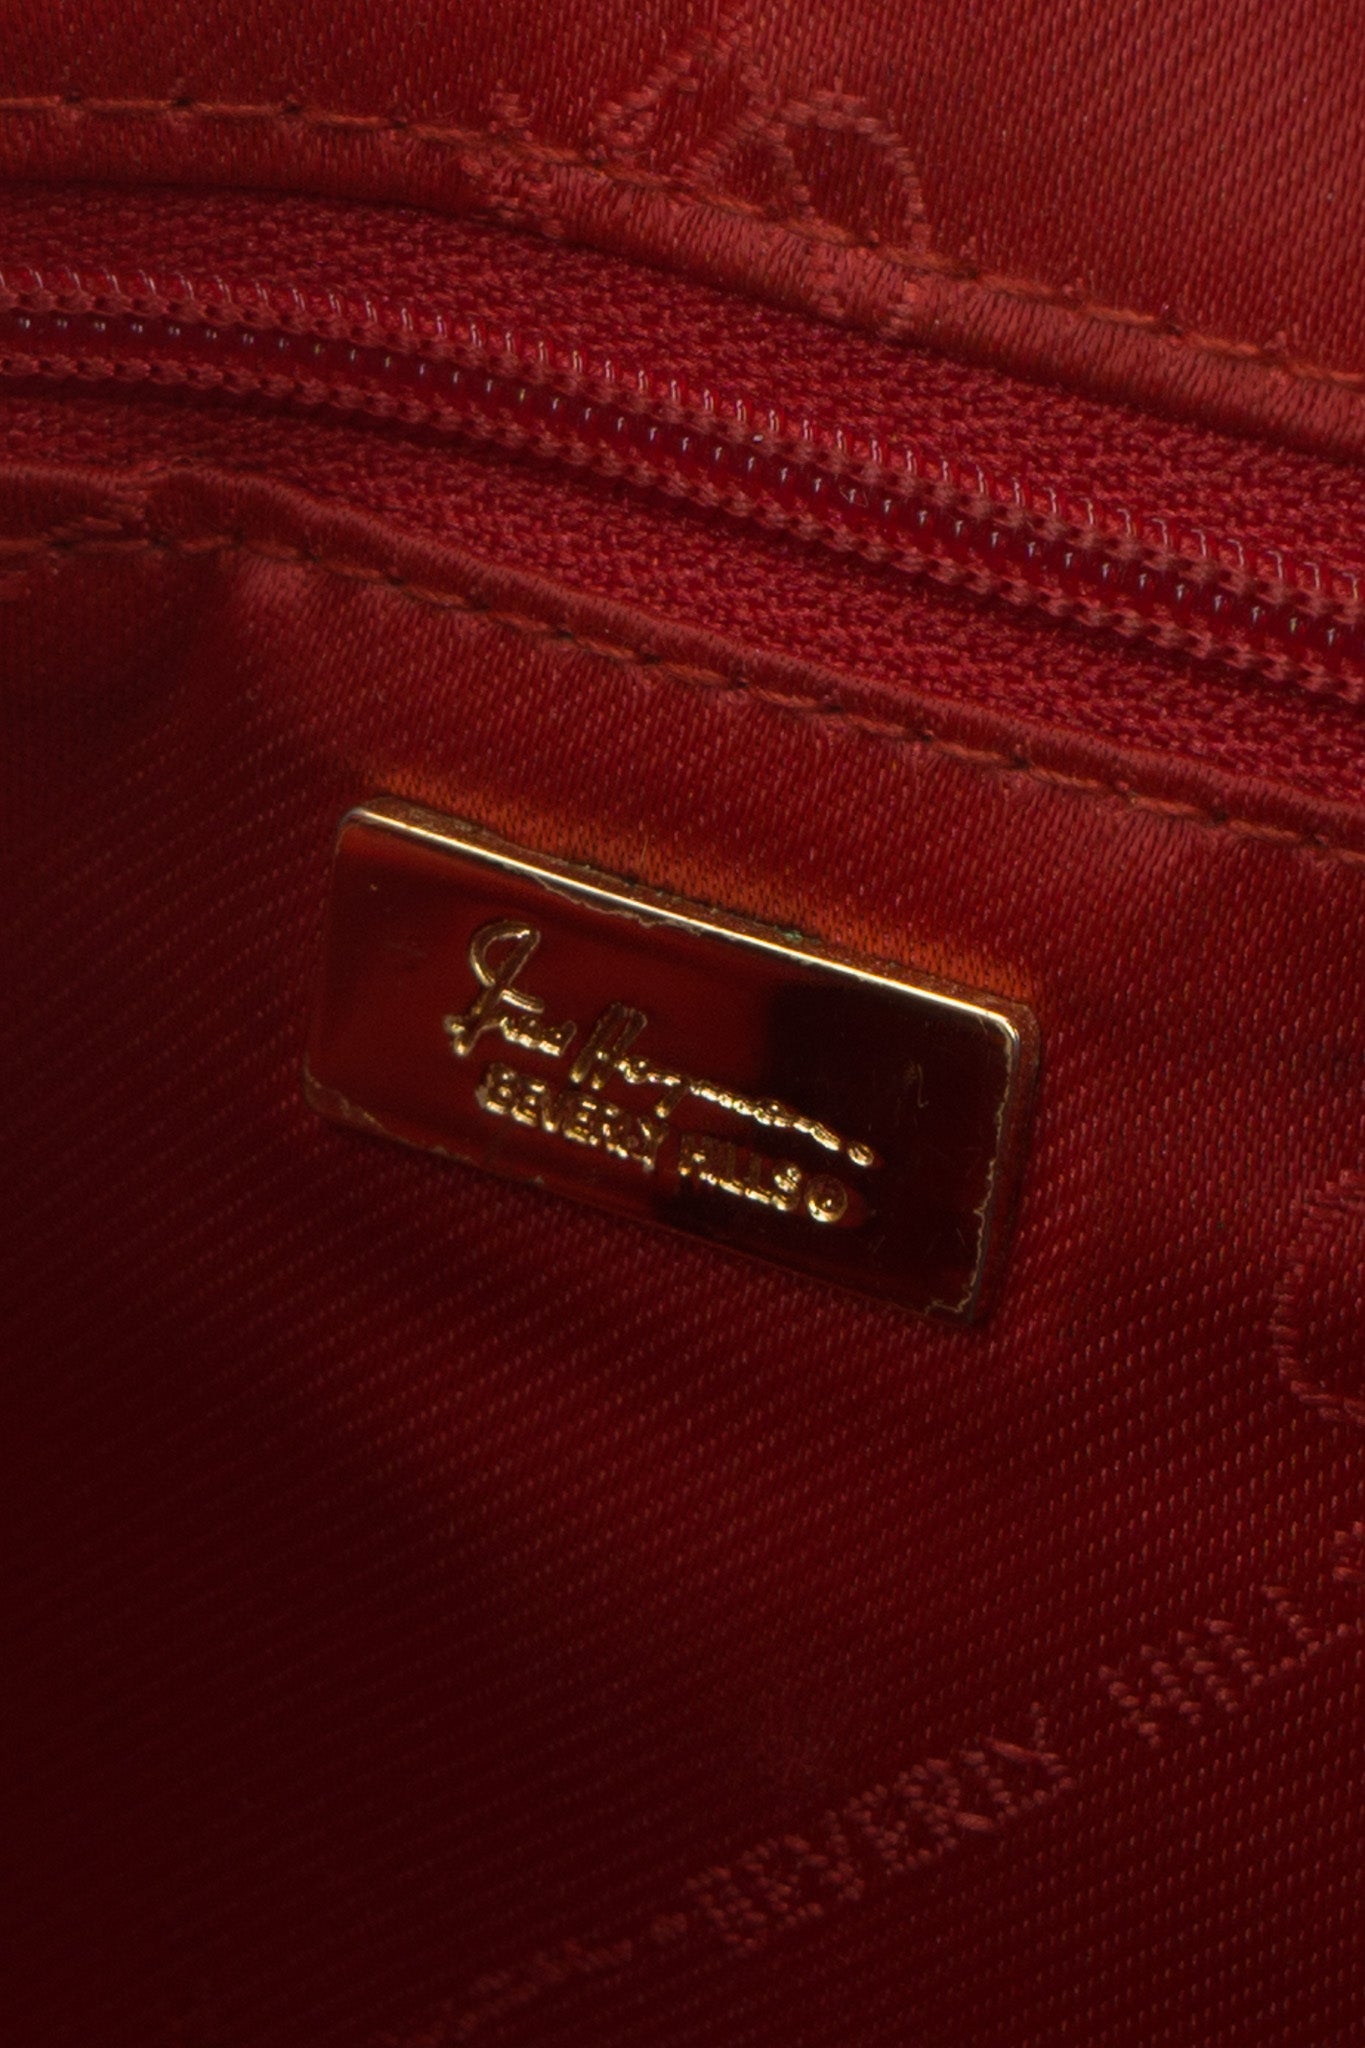 Fred Hayman Croc Embossed Leather Satchel Handbag